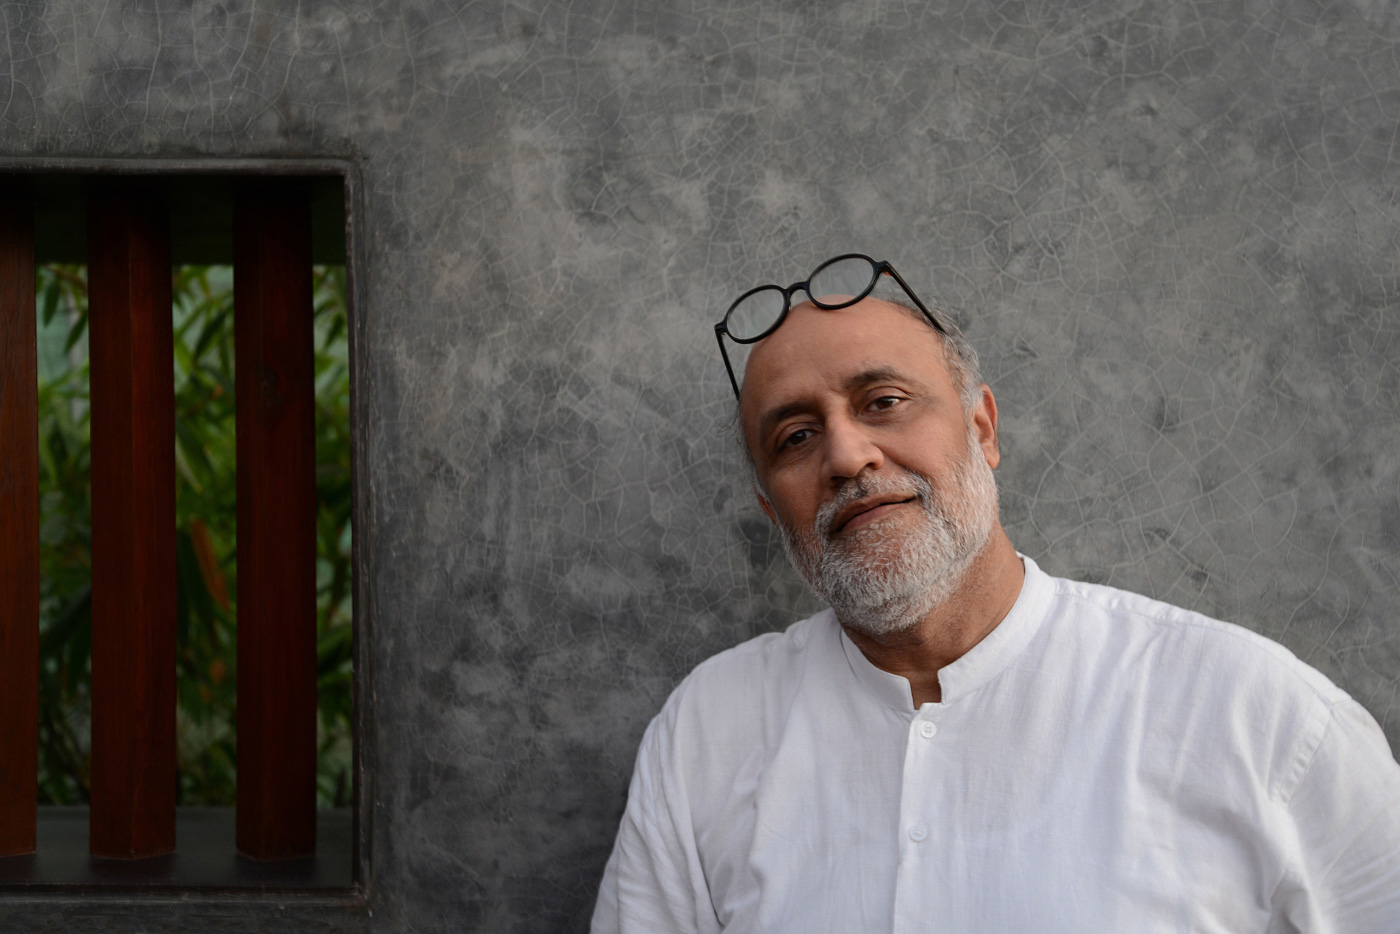 Headshot of a man, Rahul Mehrotra, in a white shirt against a stone wall